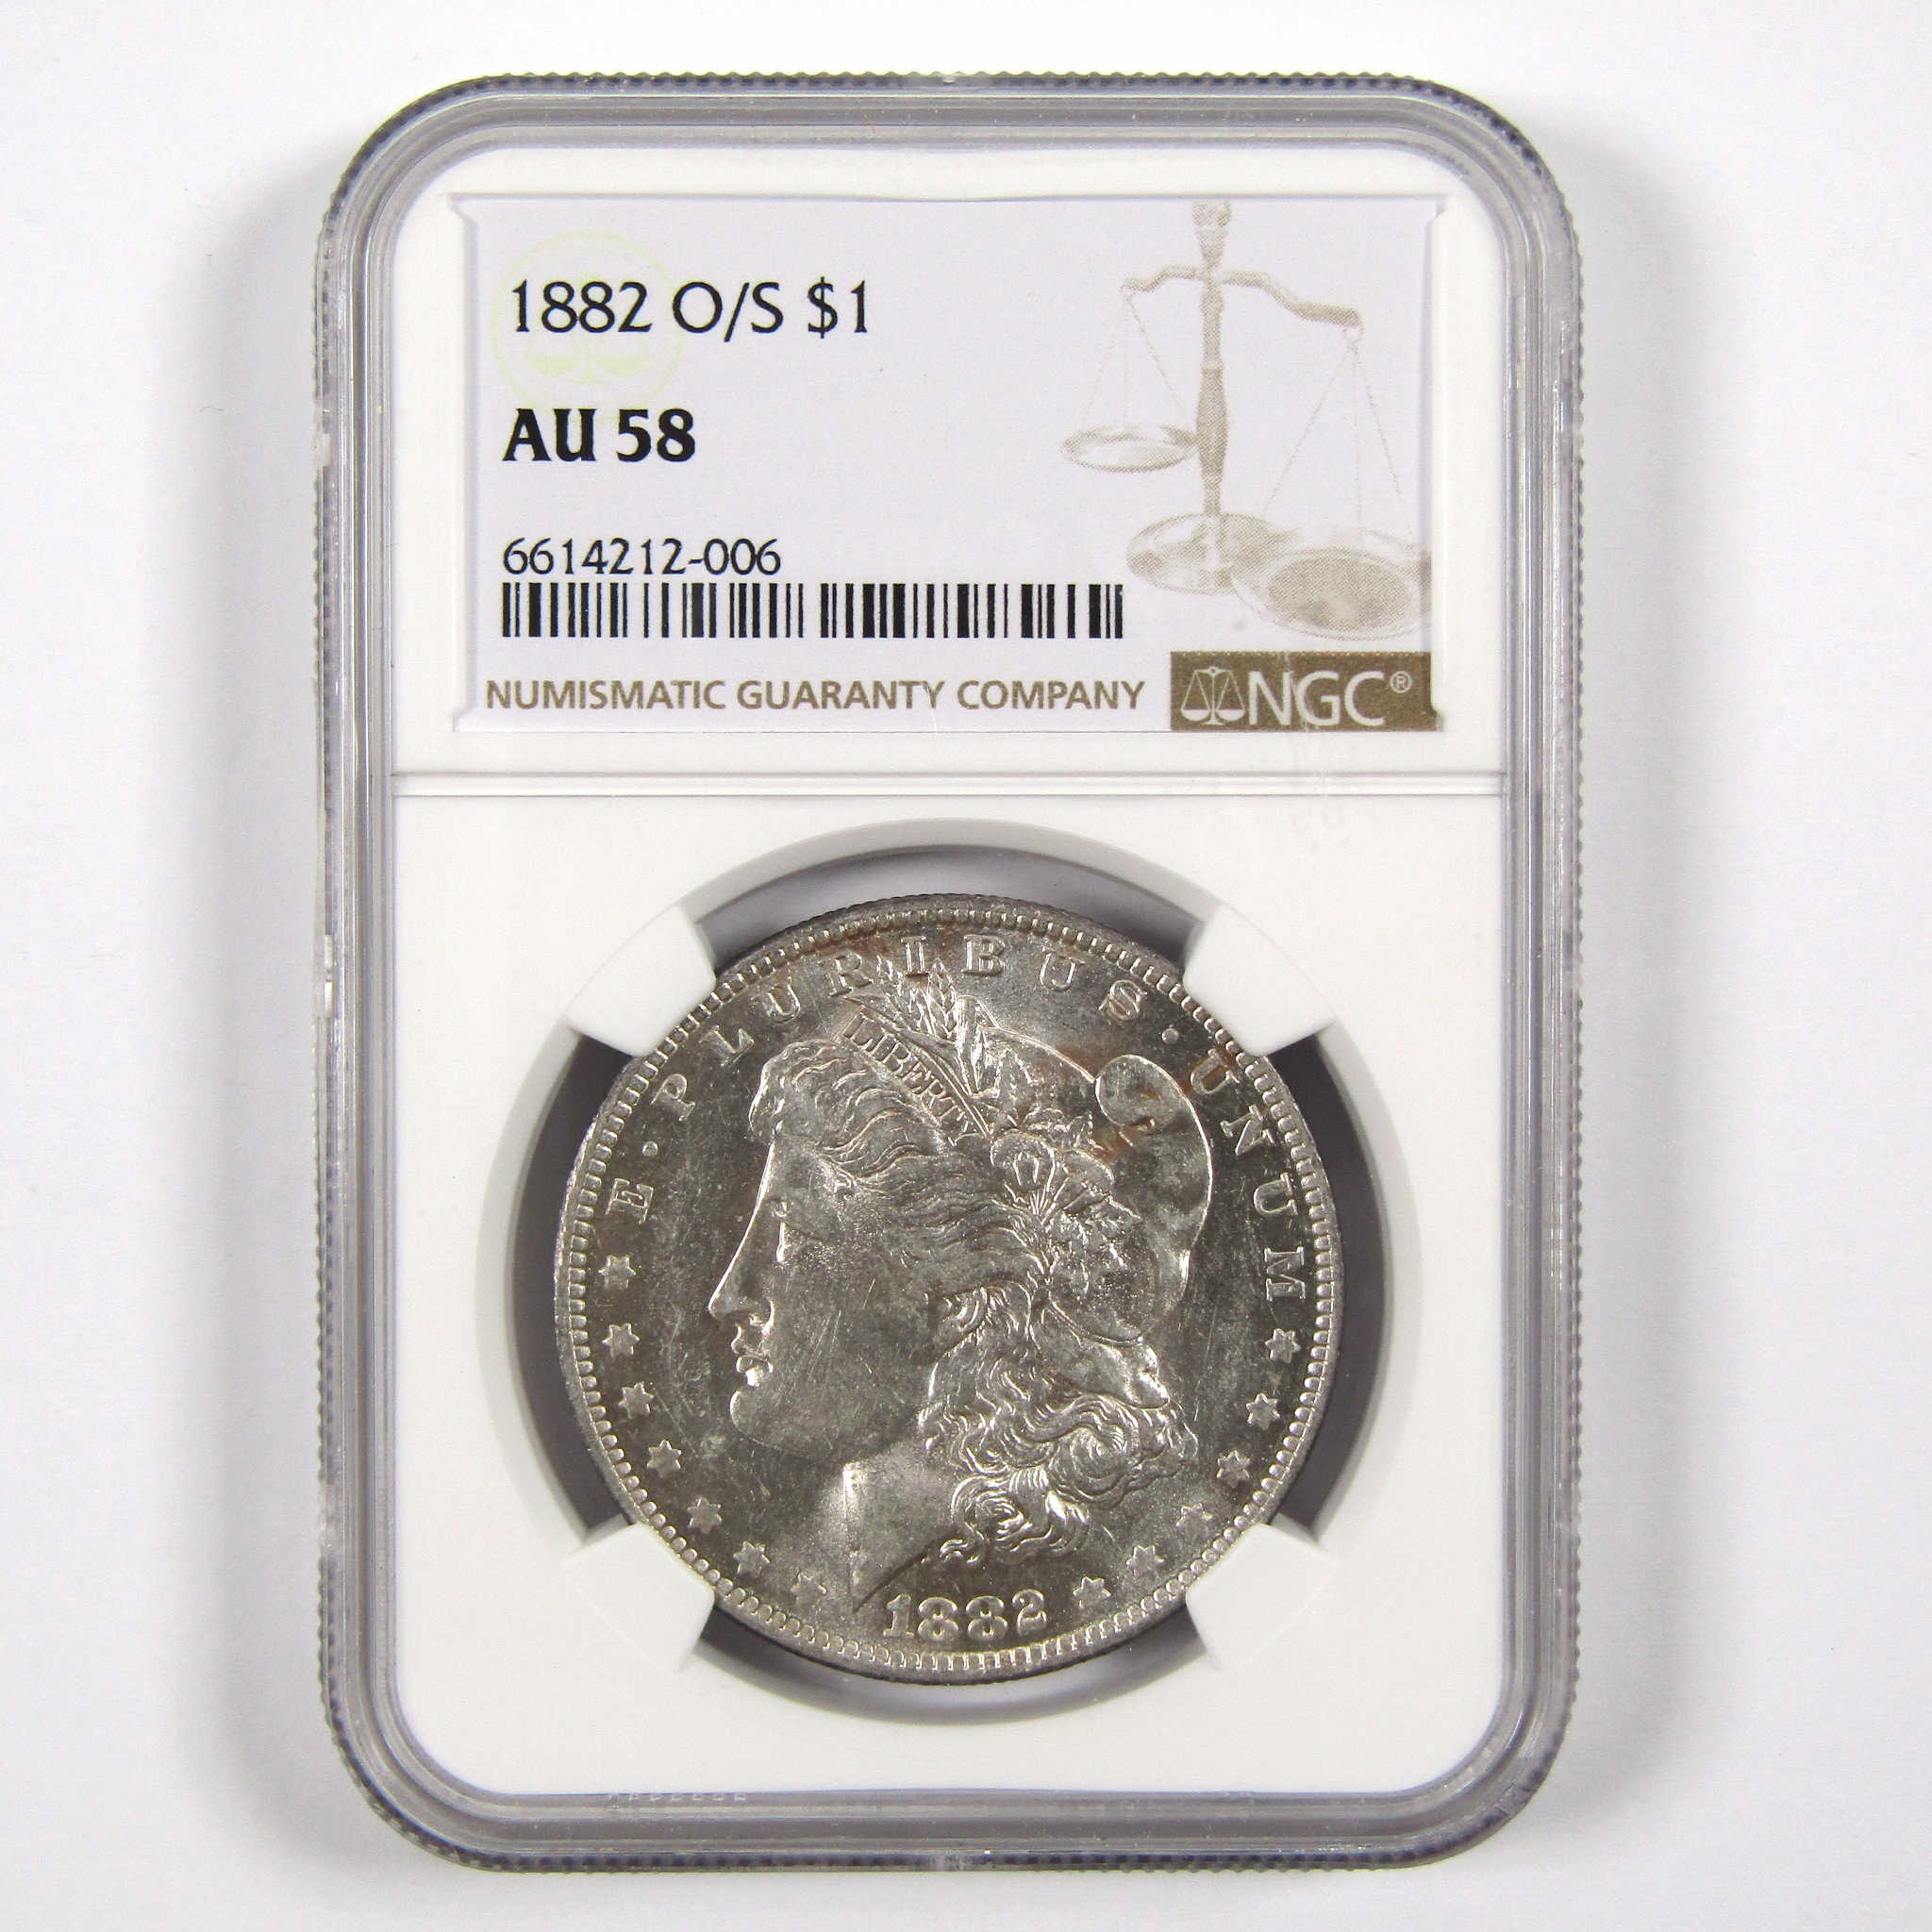 1882 O/S Morgan Dollar AU 58 NGC 90% Silver $1 Coin SKU:I7739 - Morgan coin - Morgan silver dollar - Morgan silver dollar for sale - Profile Coins &amp; Collectibles